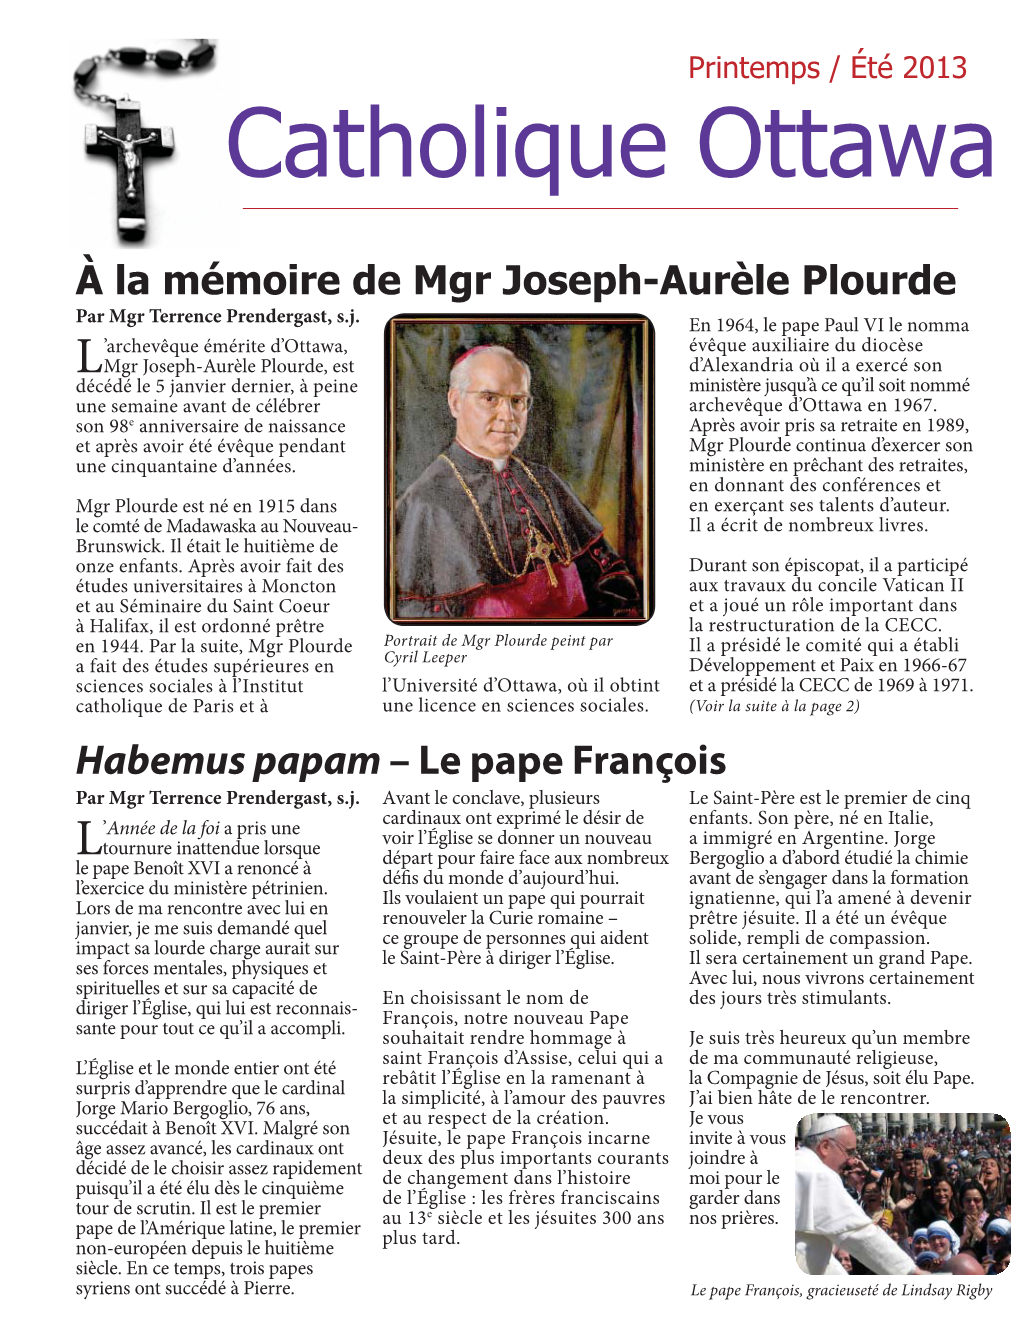 Catholique Ottawa